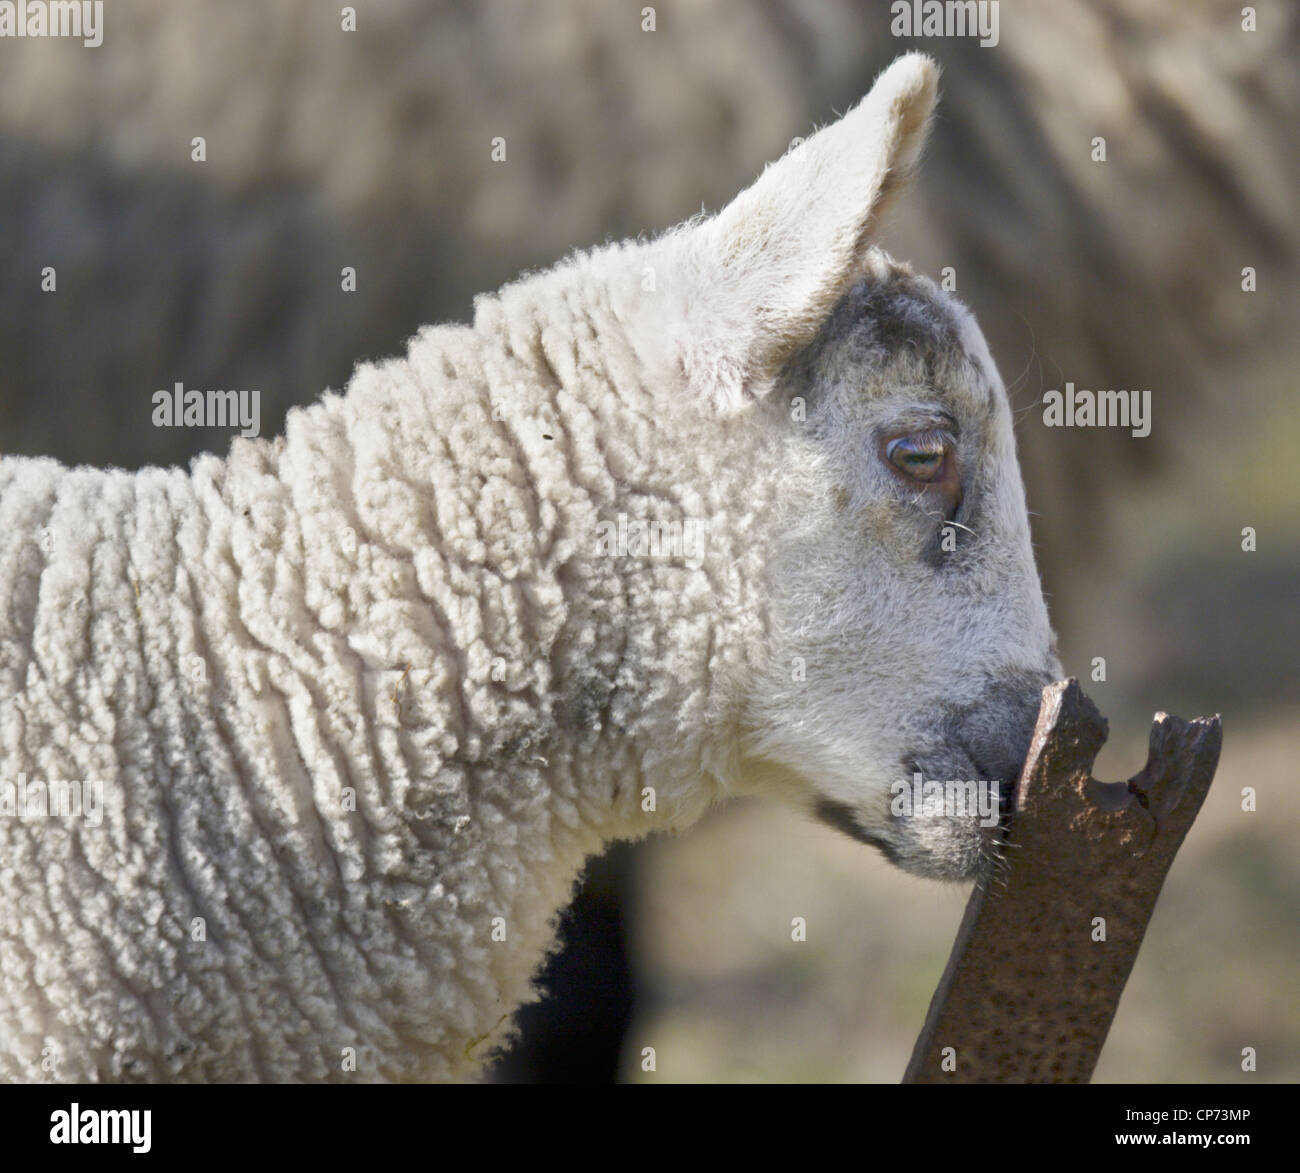 White Lamb nibbling on iron bar, UK Stock Photo